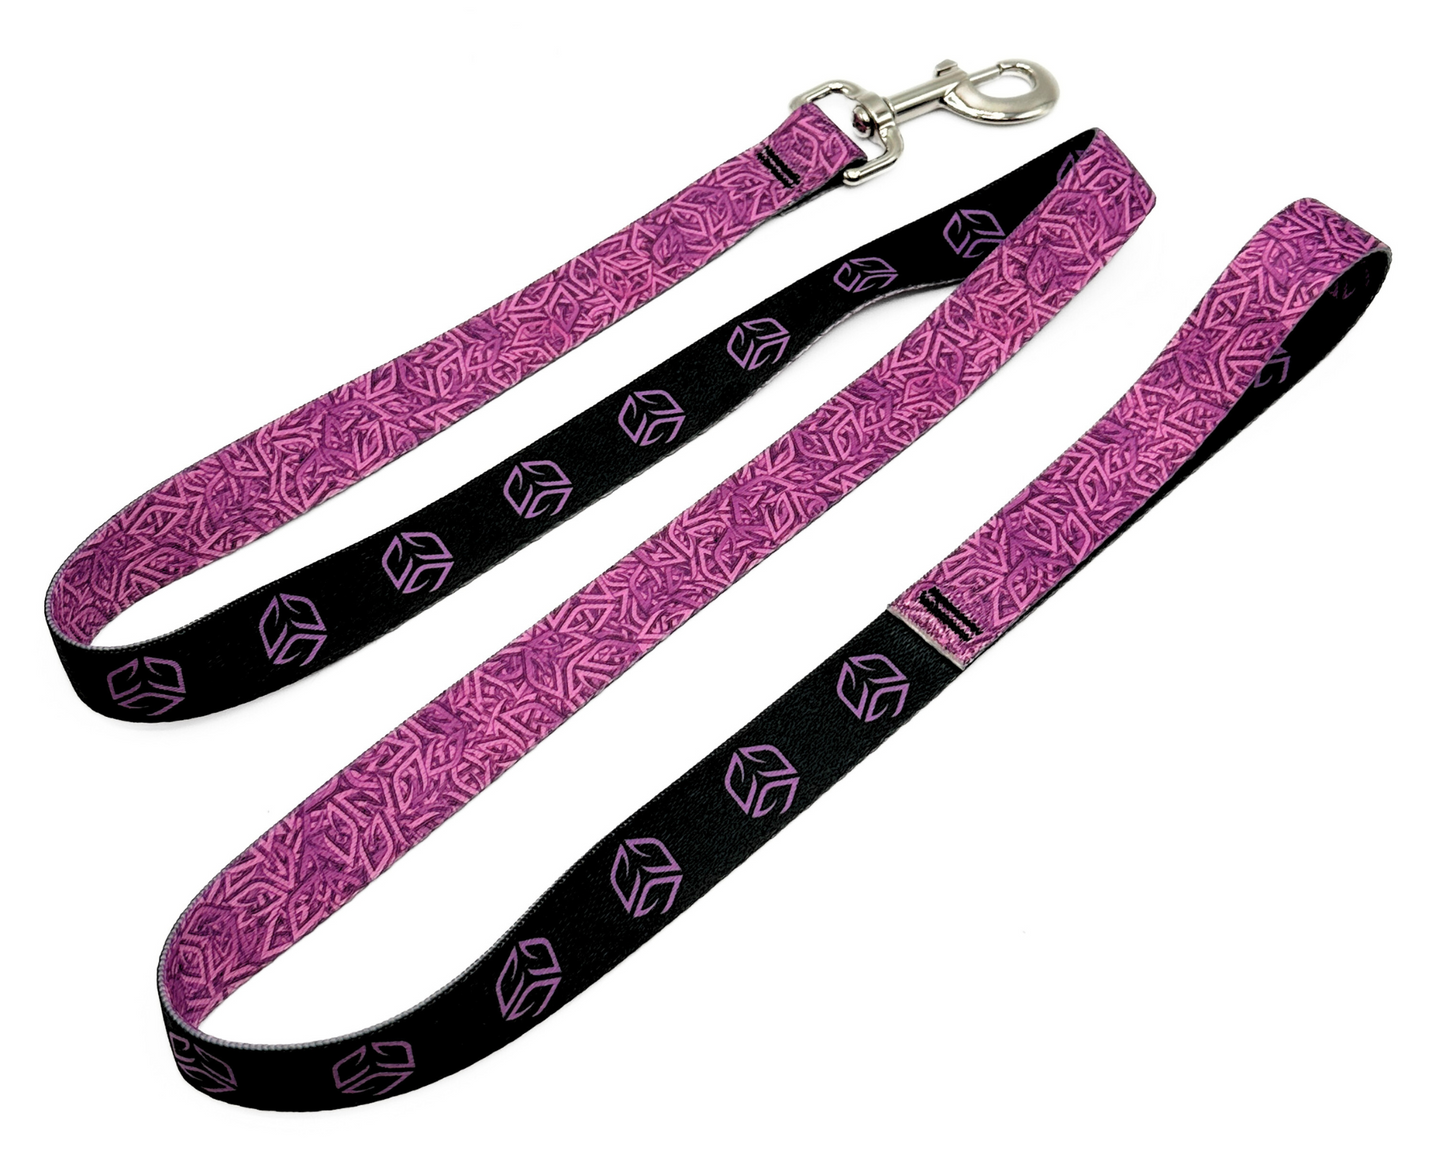 pink and black custom leash design by northwest straps.